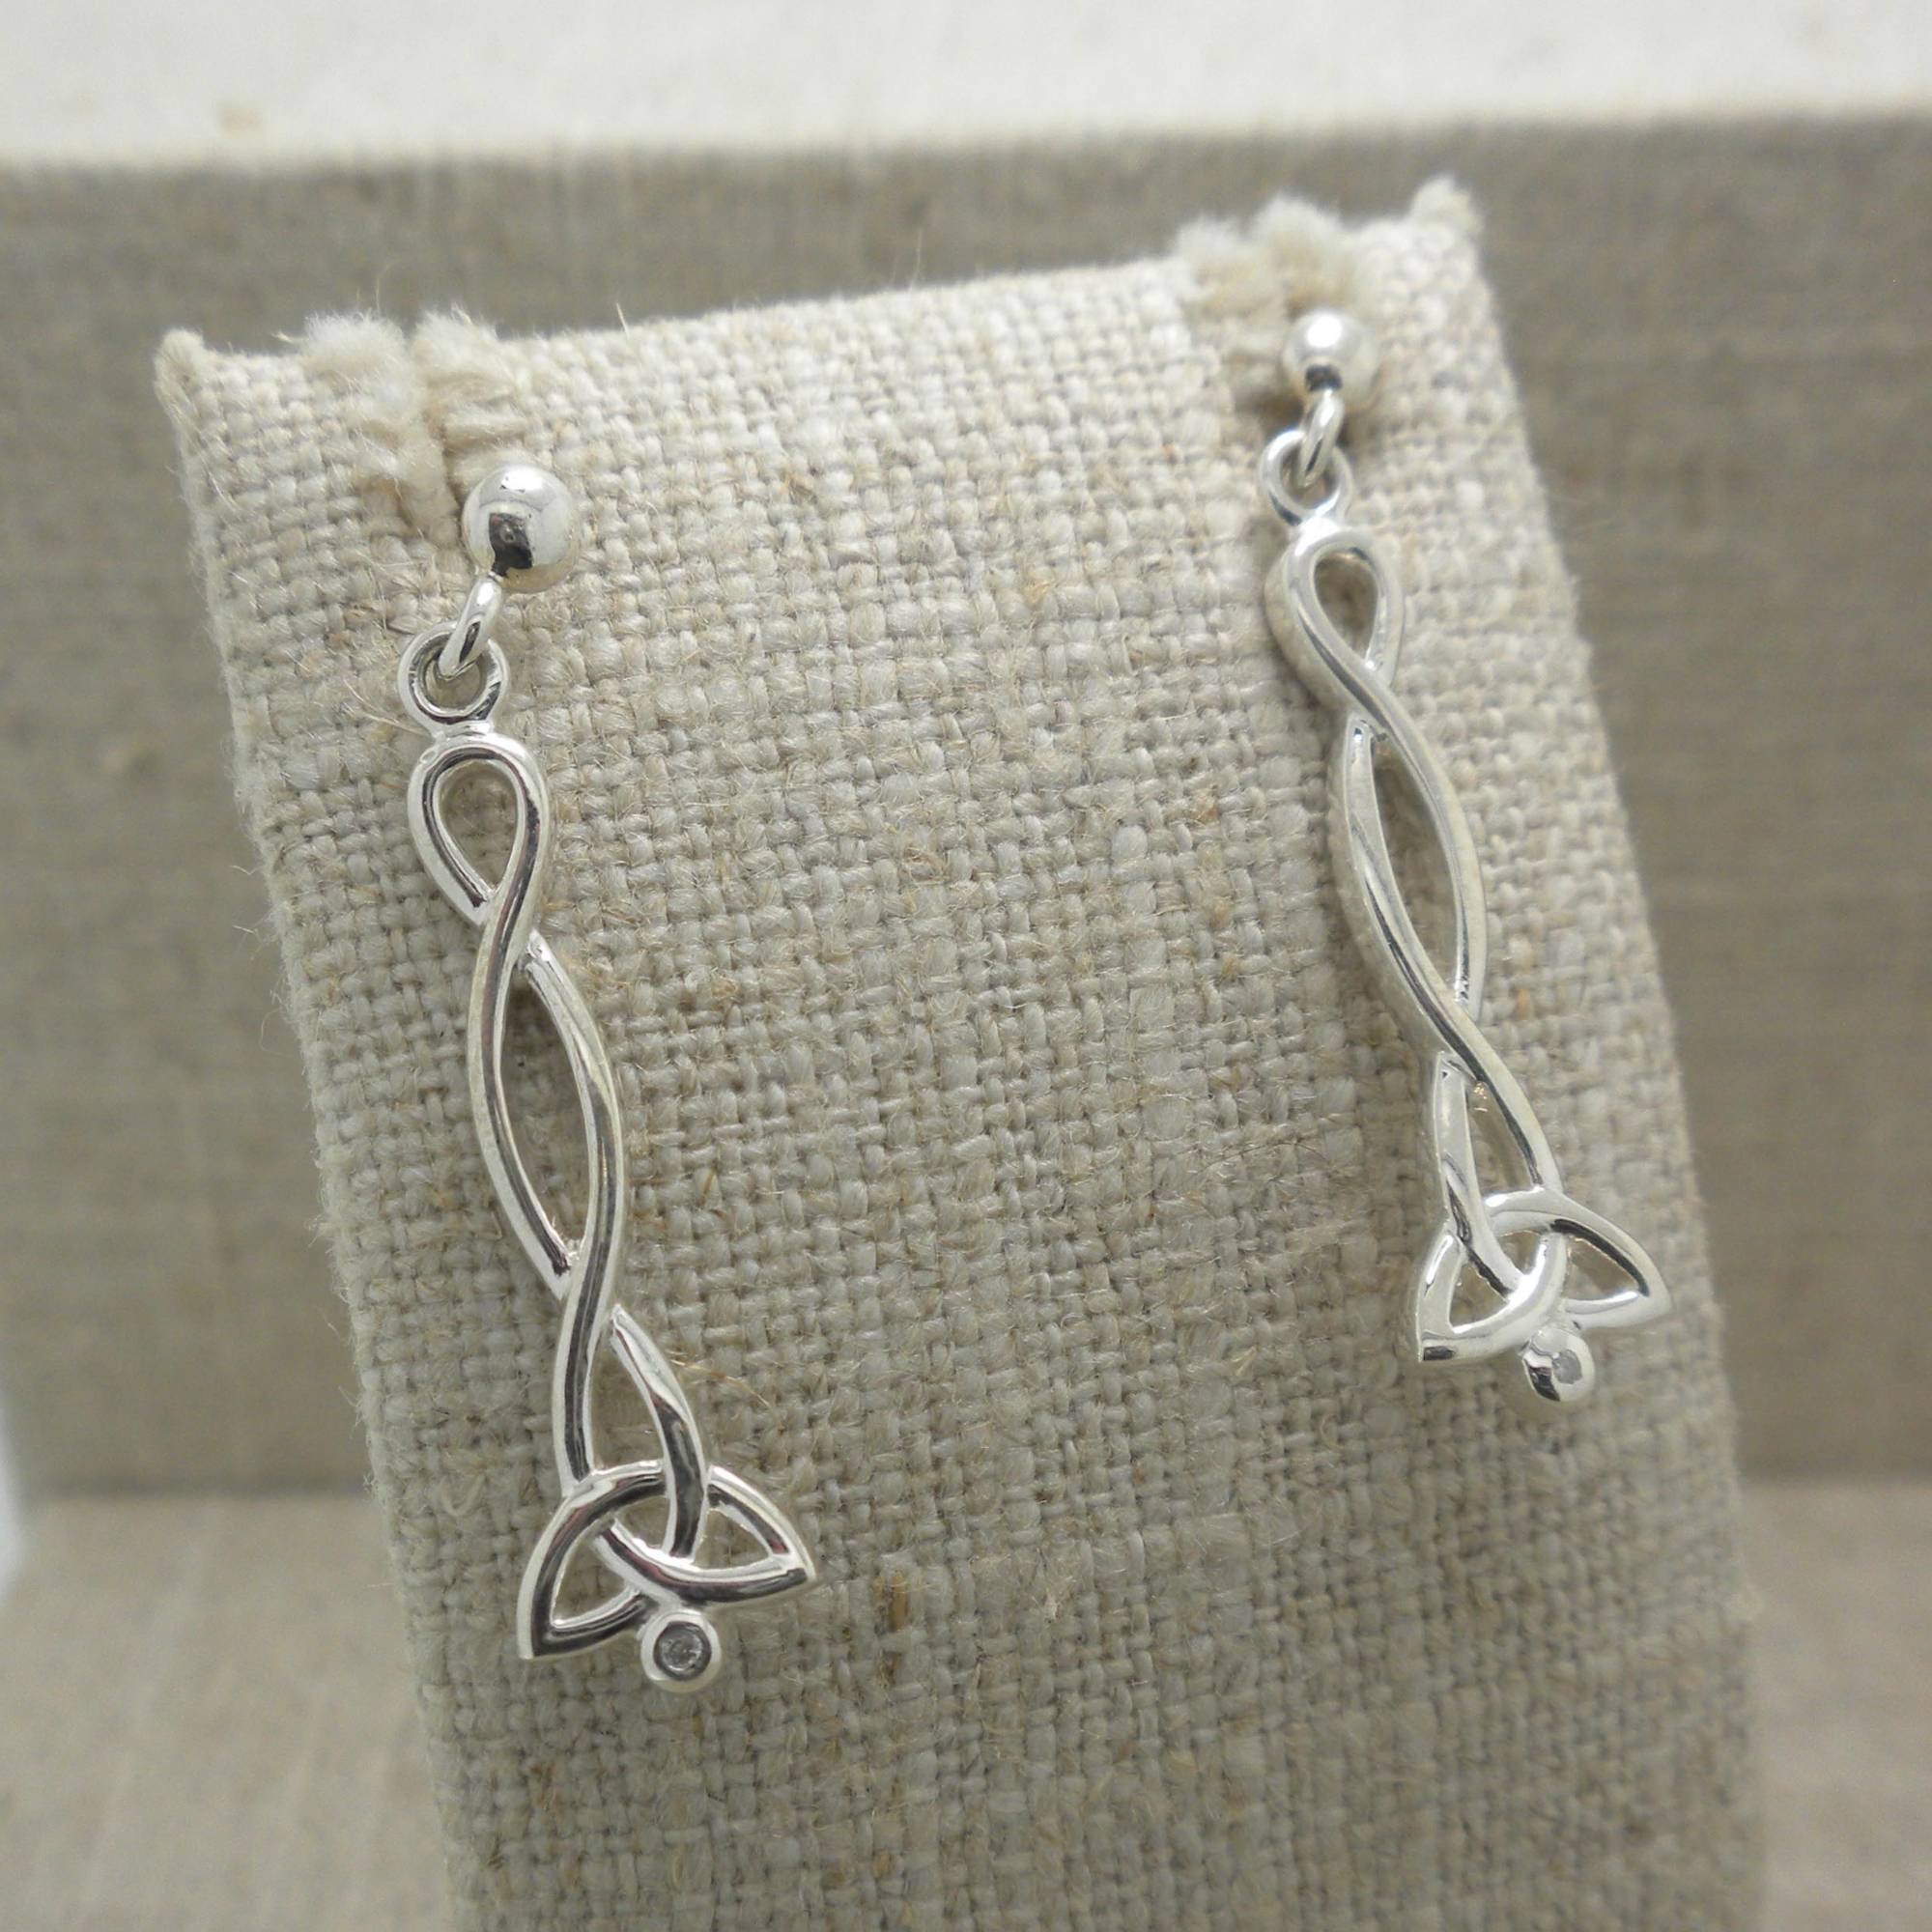 Trinity Knot Earrings by Keith jack